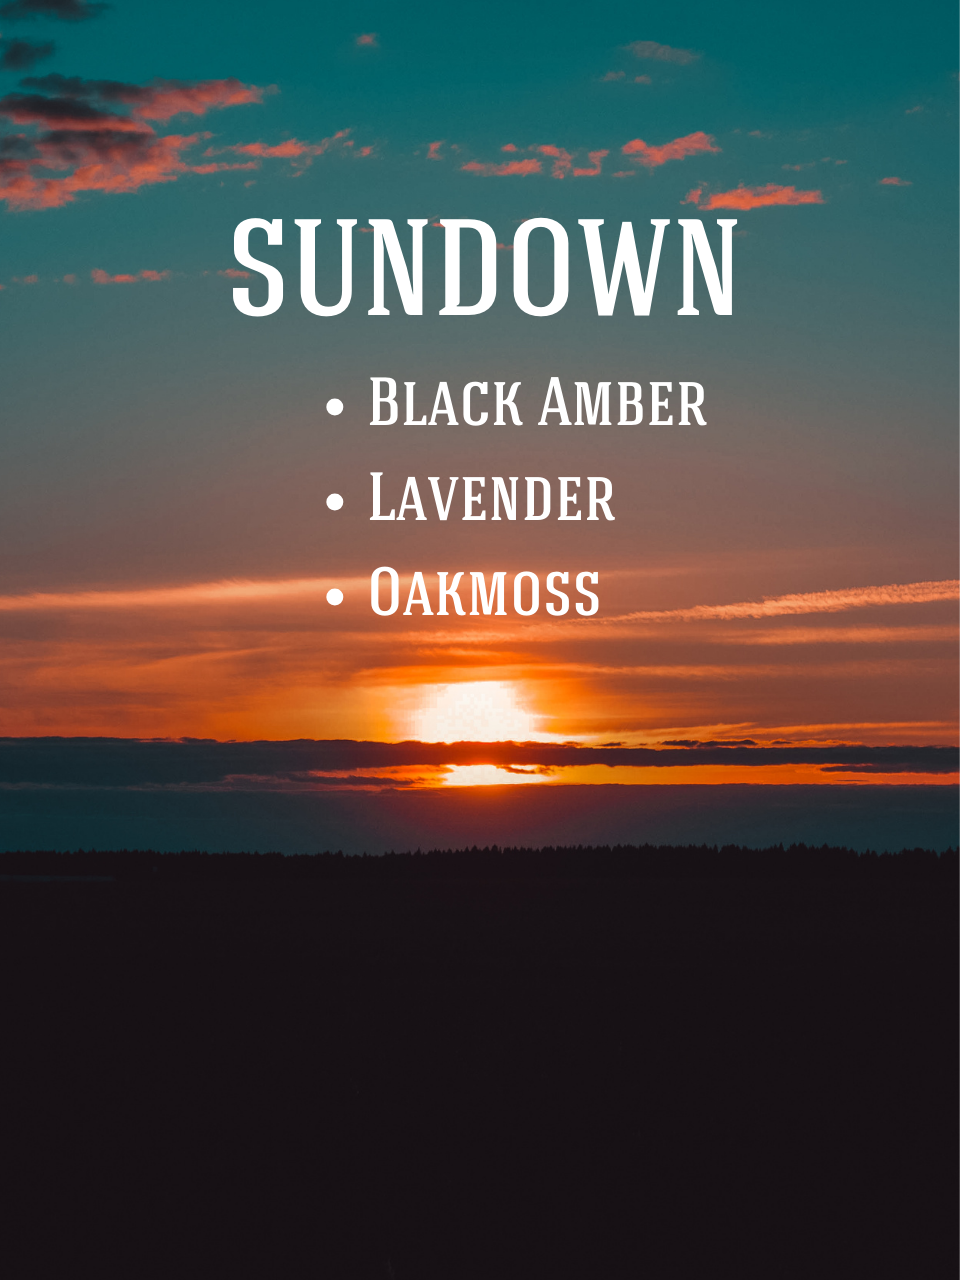 Sundown Soy Candle: Black Amber, Lavender, Oakmoss